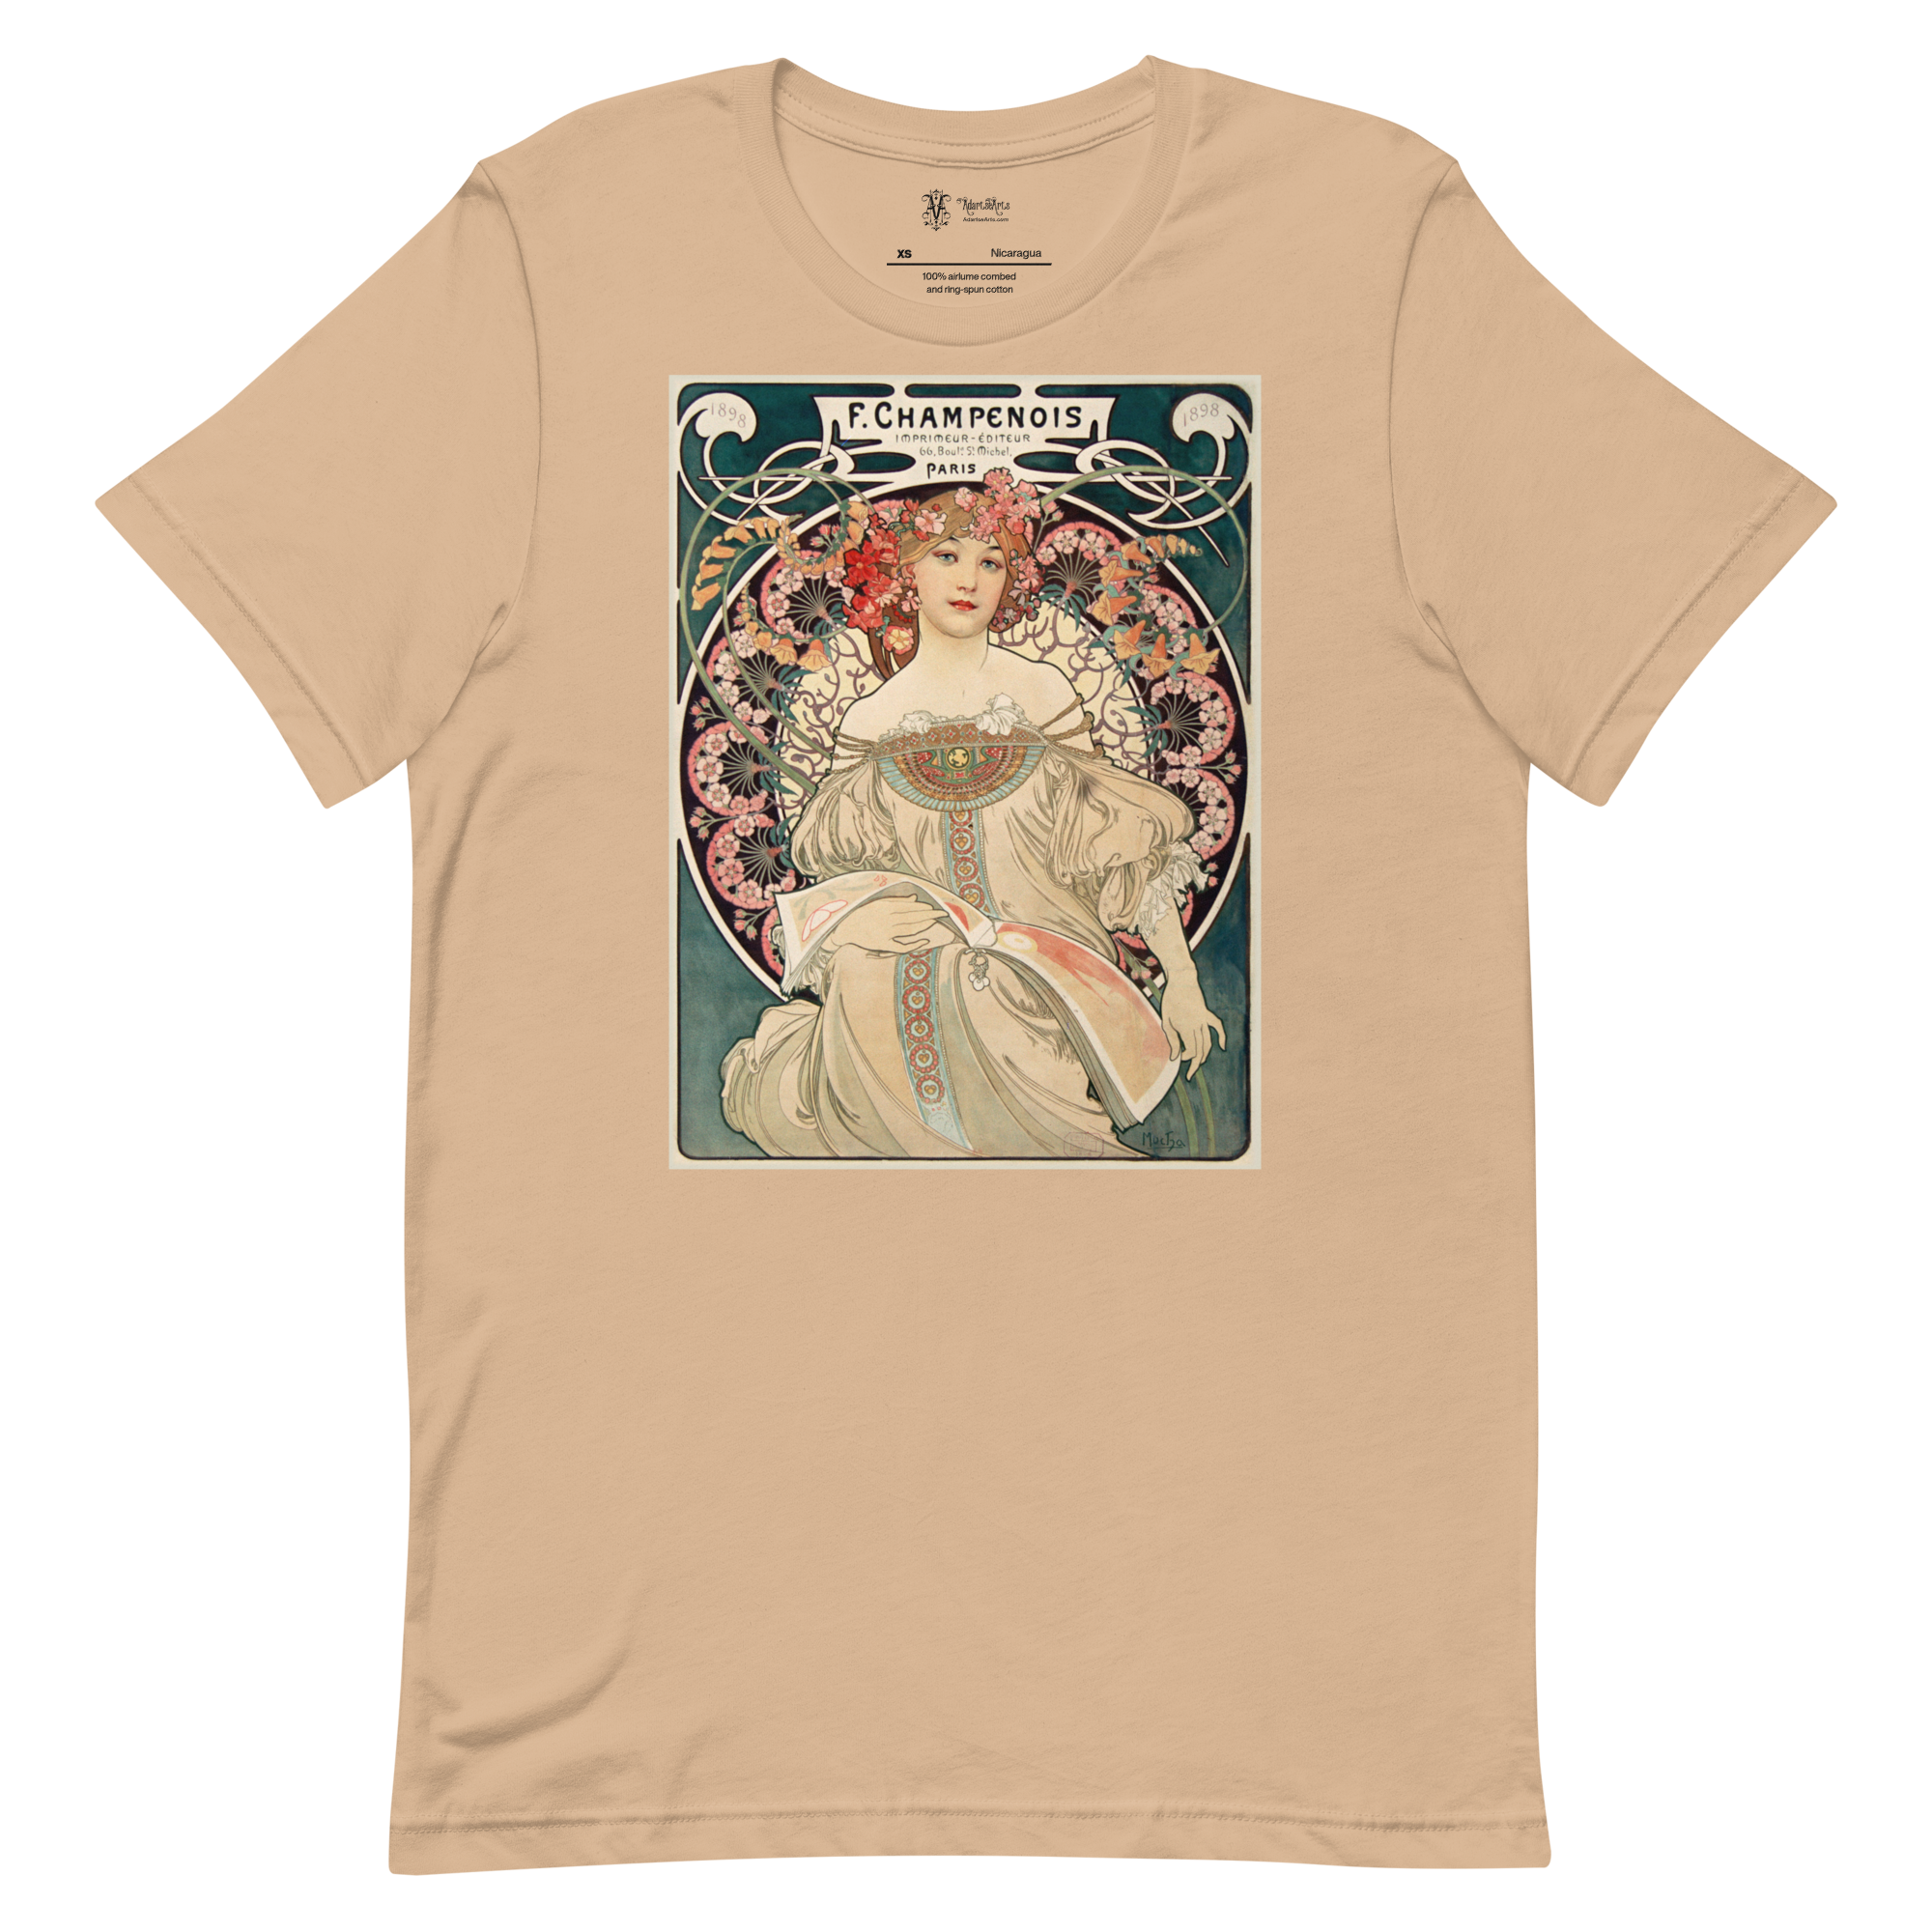 Premium Unisex Art T-Shirt of F. Champenois (1898) by Alphonse Mucha.